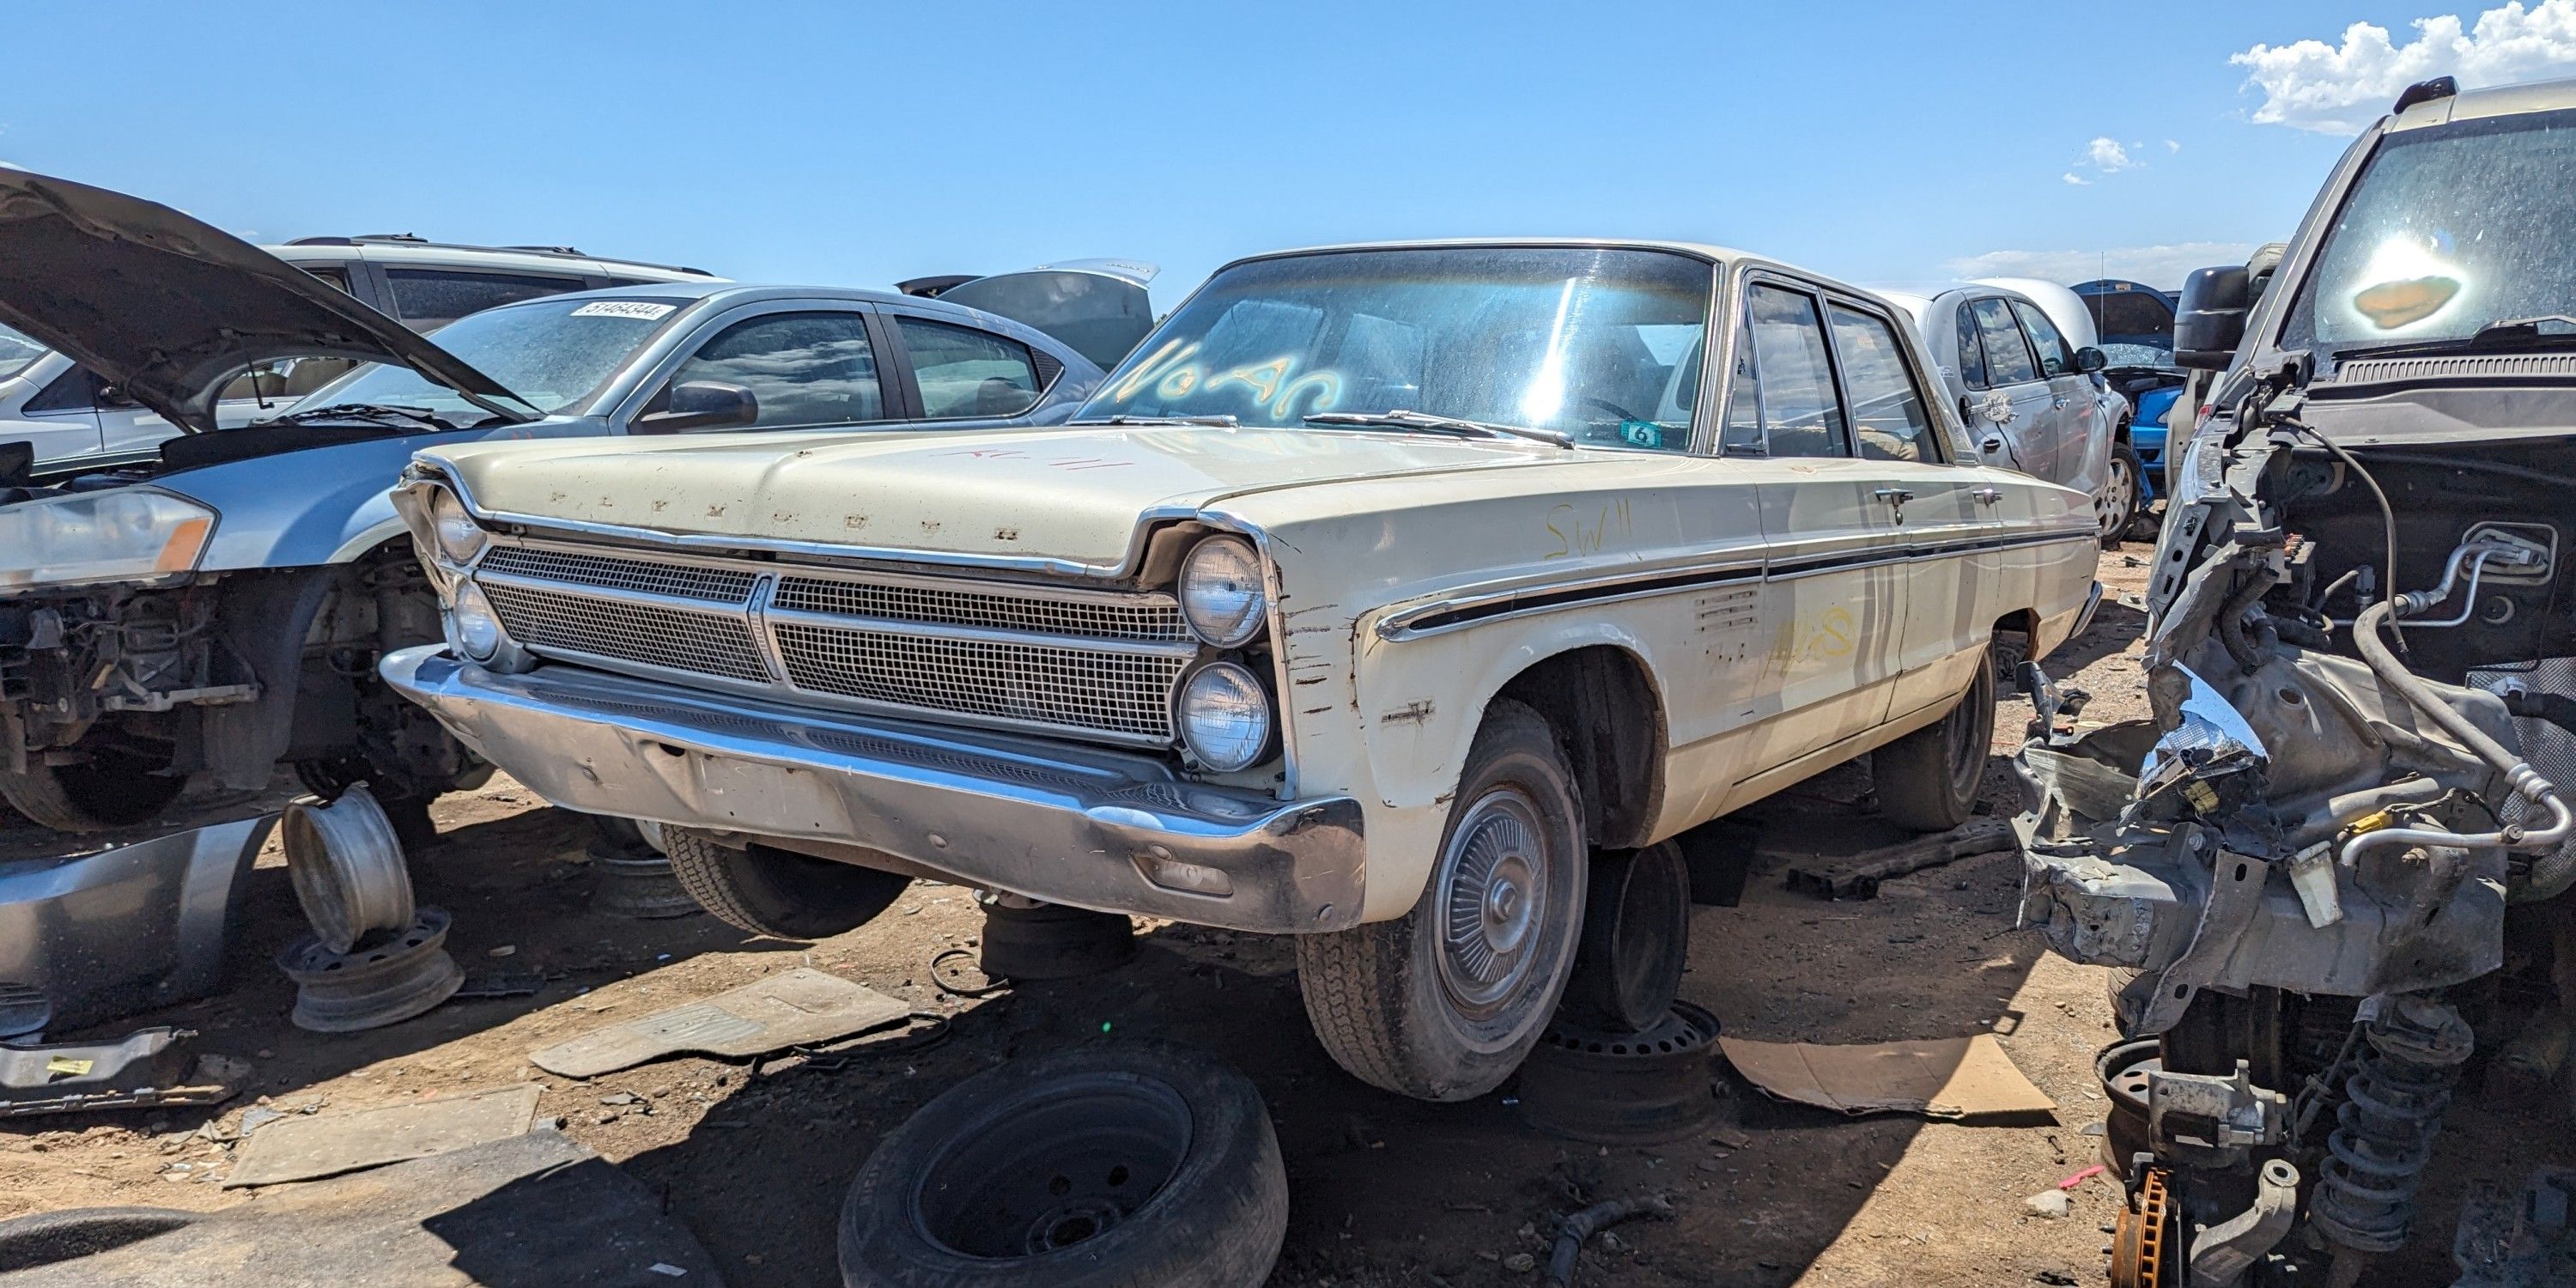 1965 Plymouth Fury III Sedan Is Junkyard Treasure in Colorado